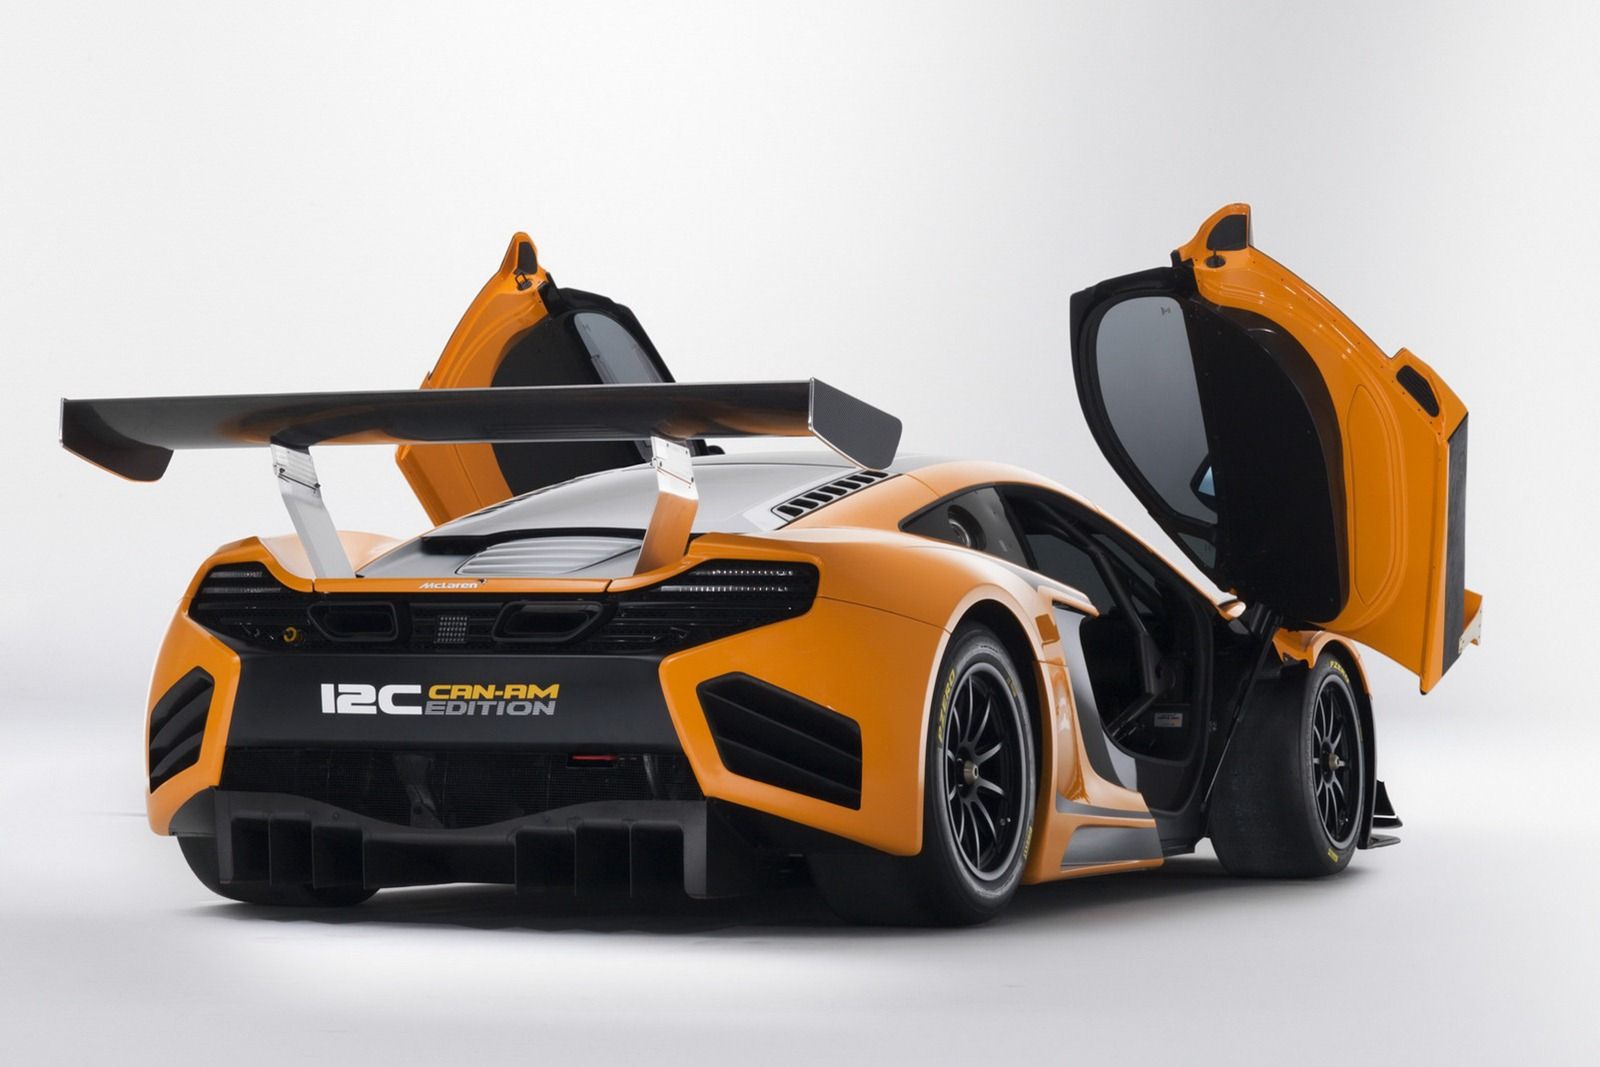 2013 McLaren 12C Can-Am Edition